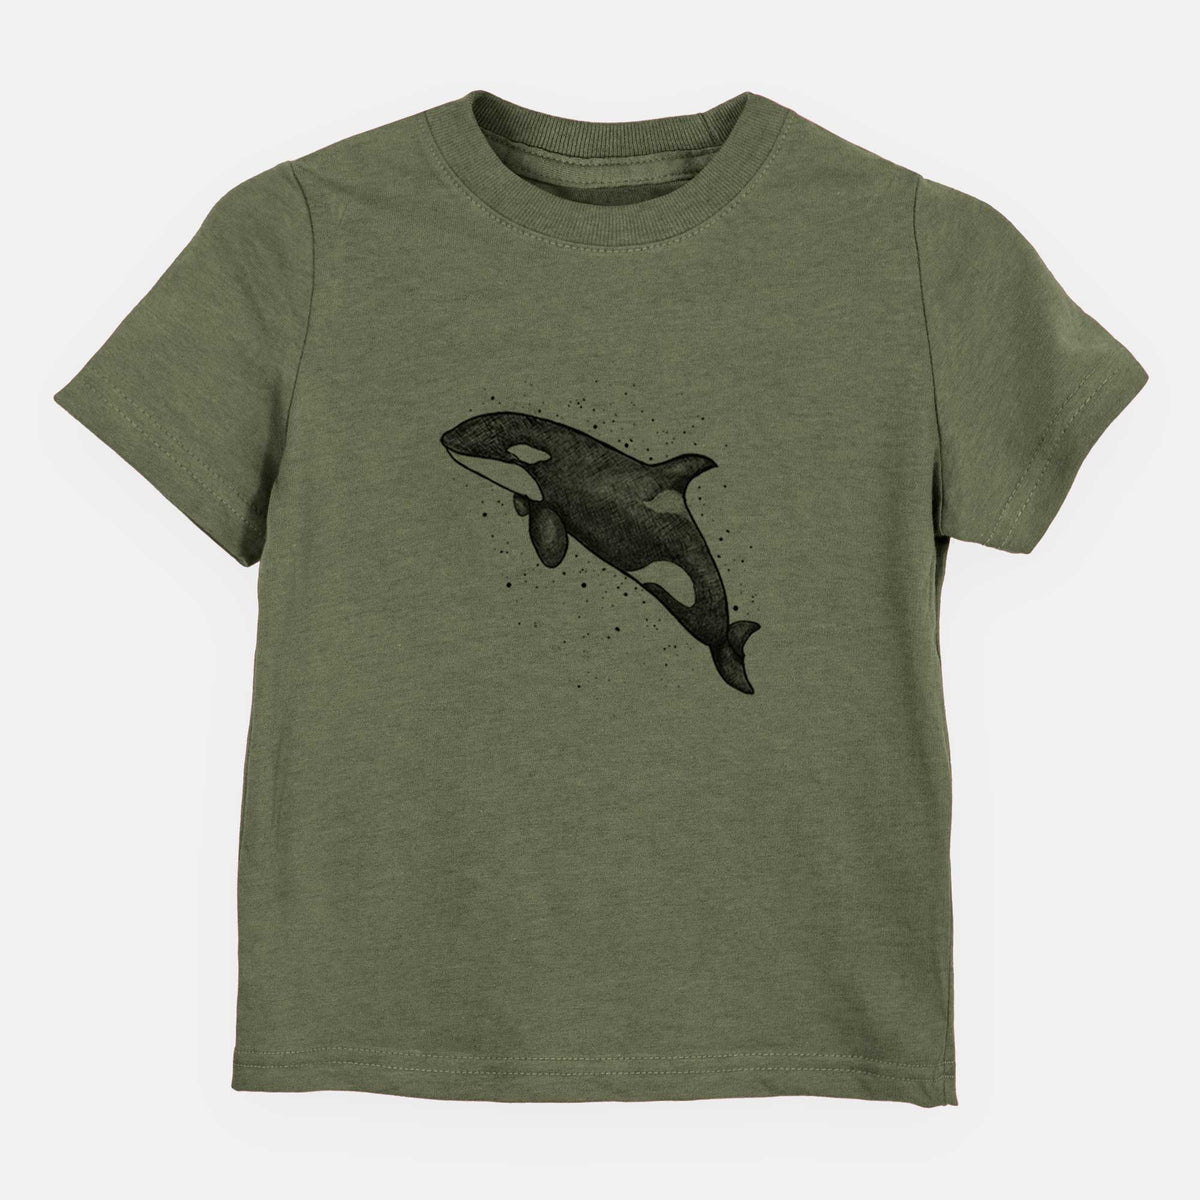 Orca Whale - Kids Shirt